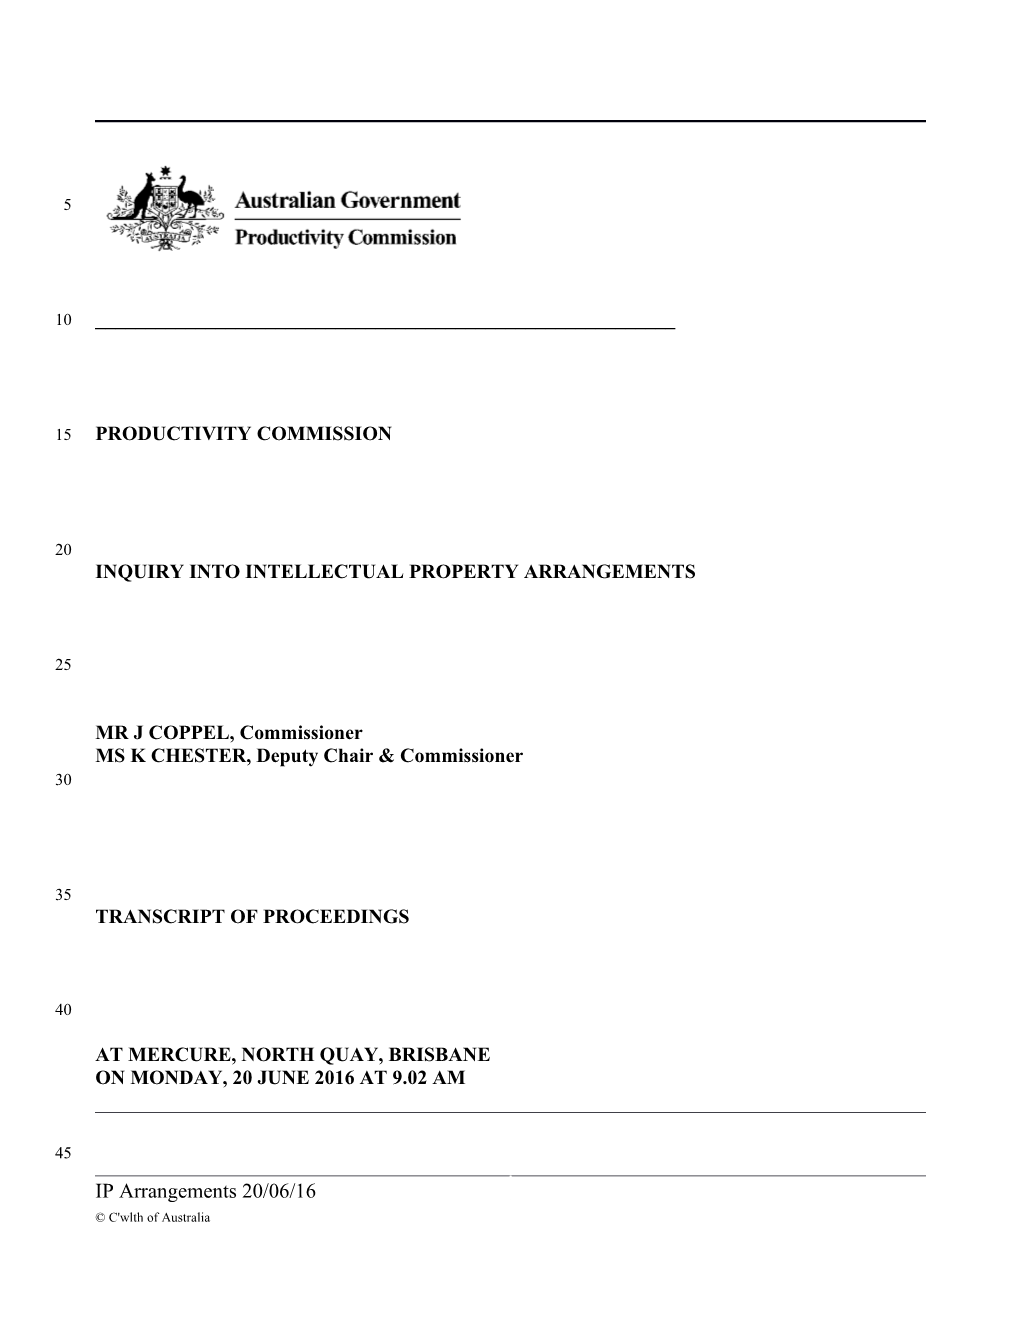 20 June 2016 - Brisbane Public Hearing Transcript - Intellectual Property Arrangements